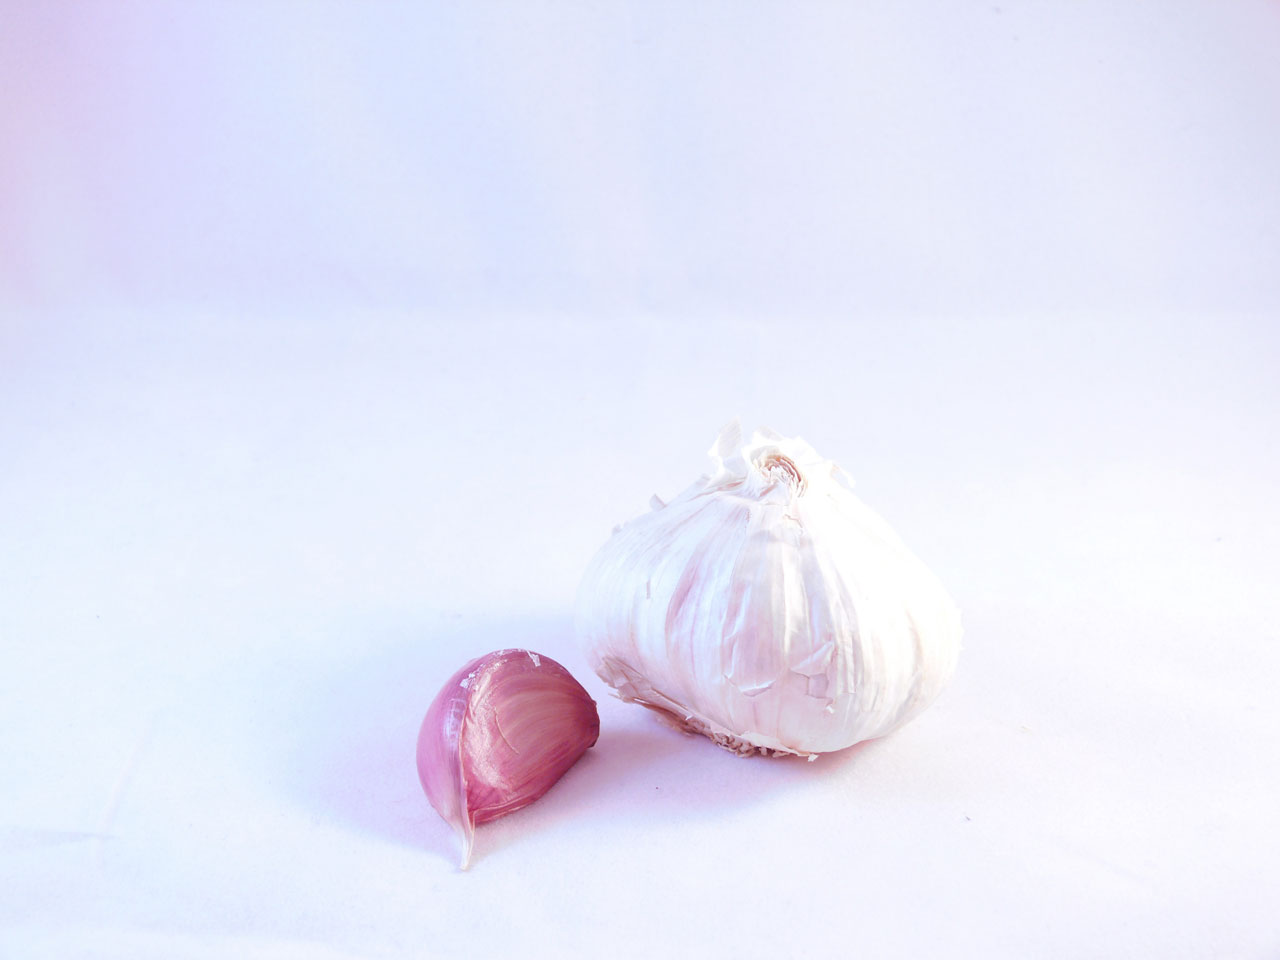 garlic white background free photo